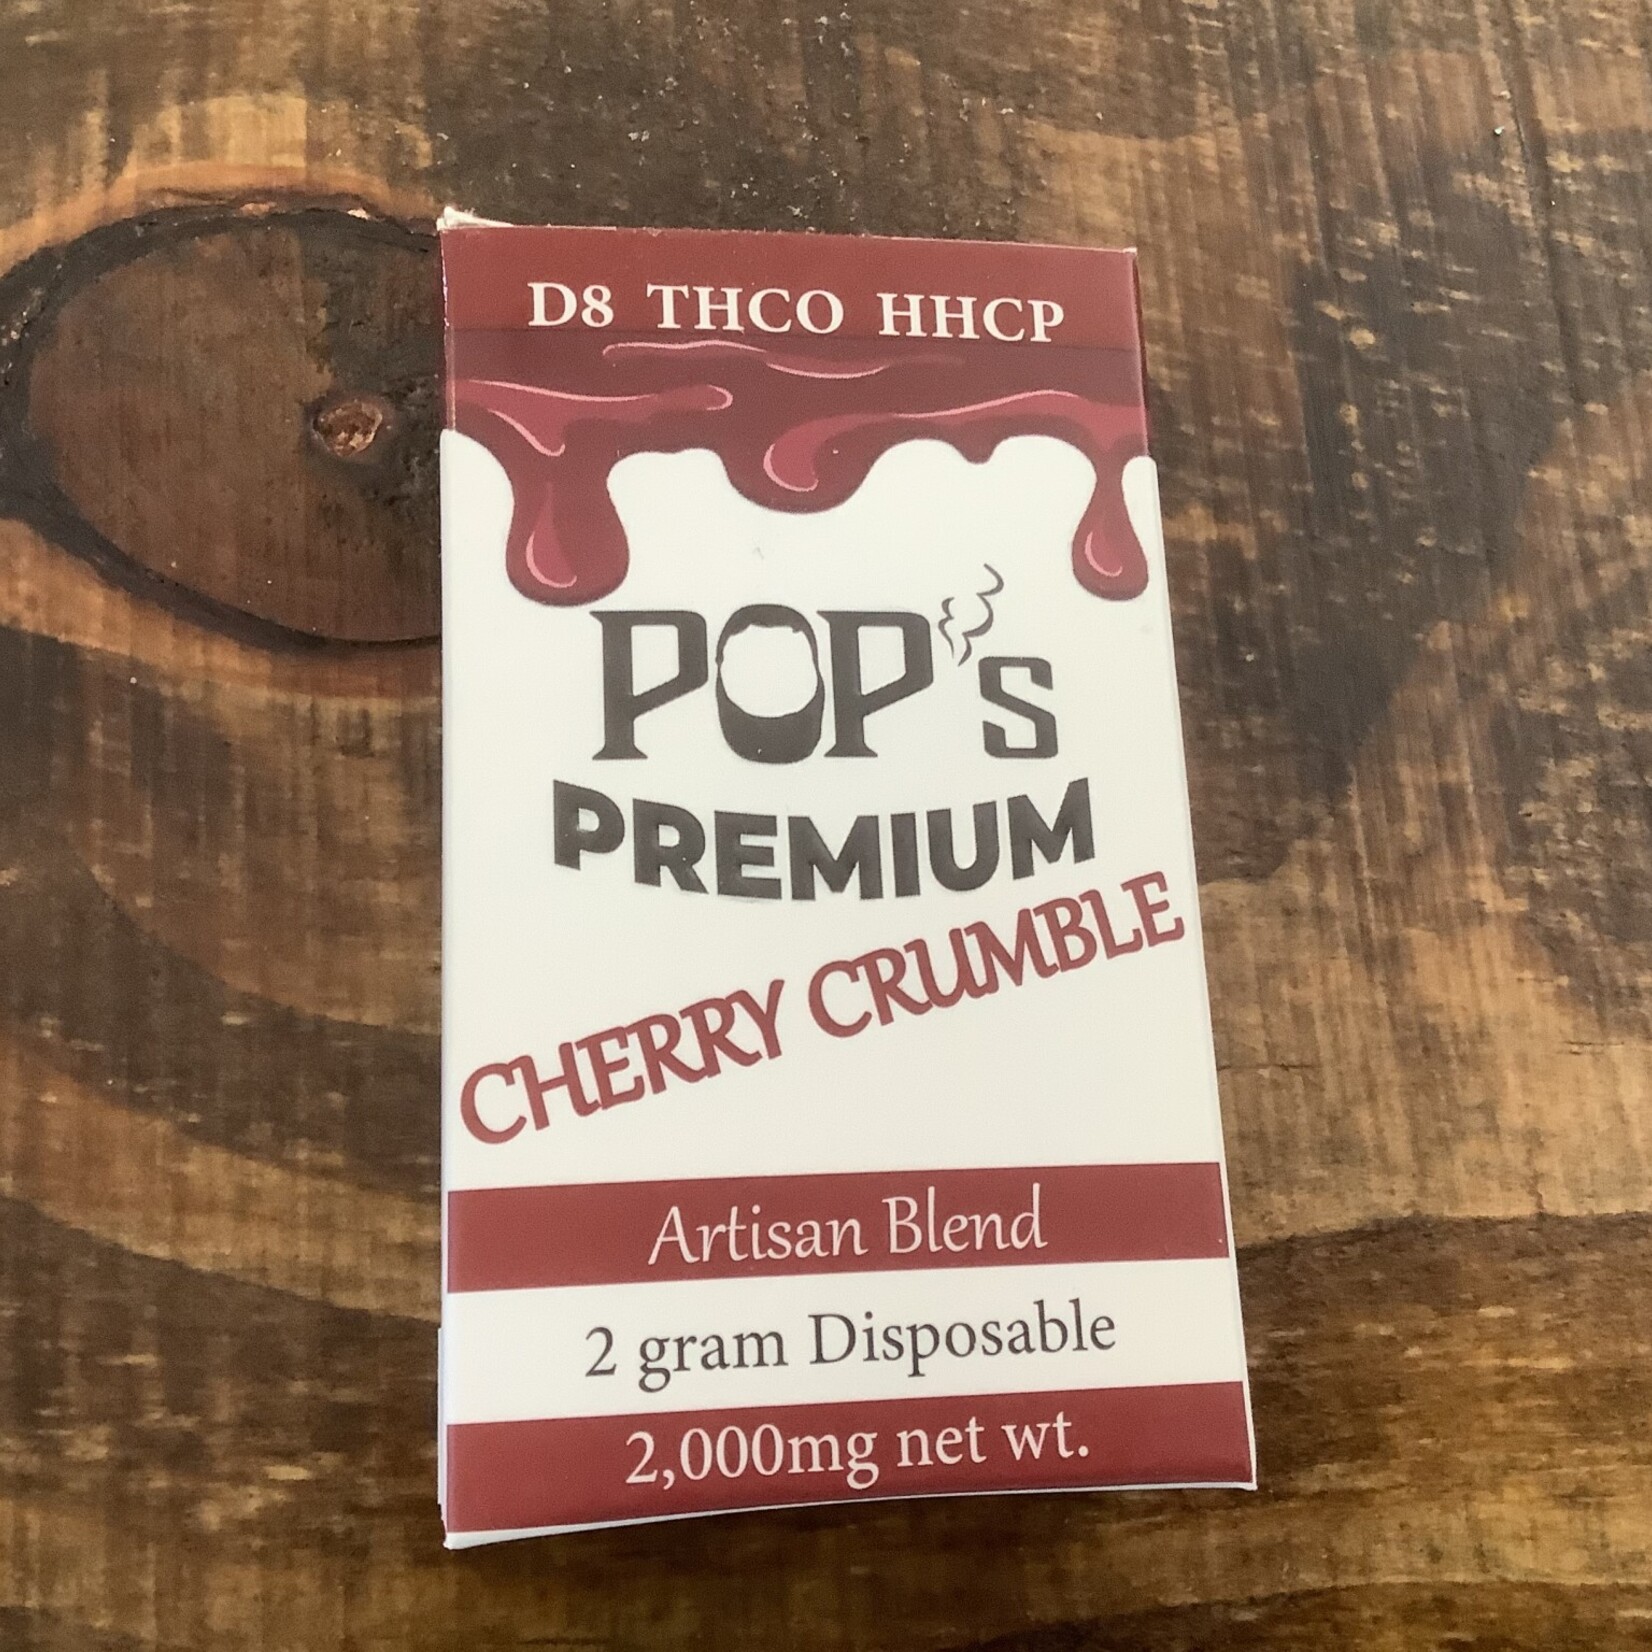 POP’s Premium D8 cart ( Cherry Crumble - THCO & HHCP) 2g